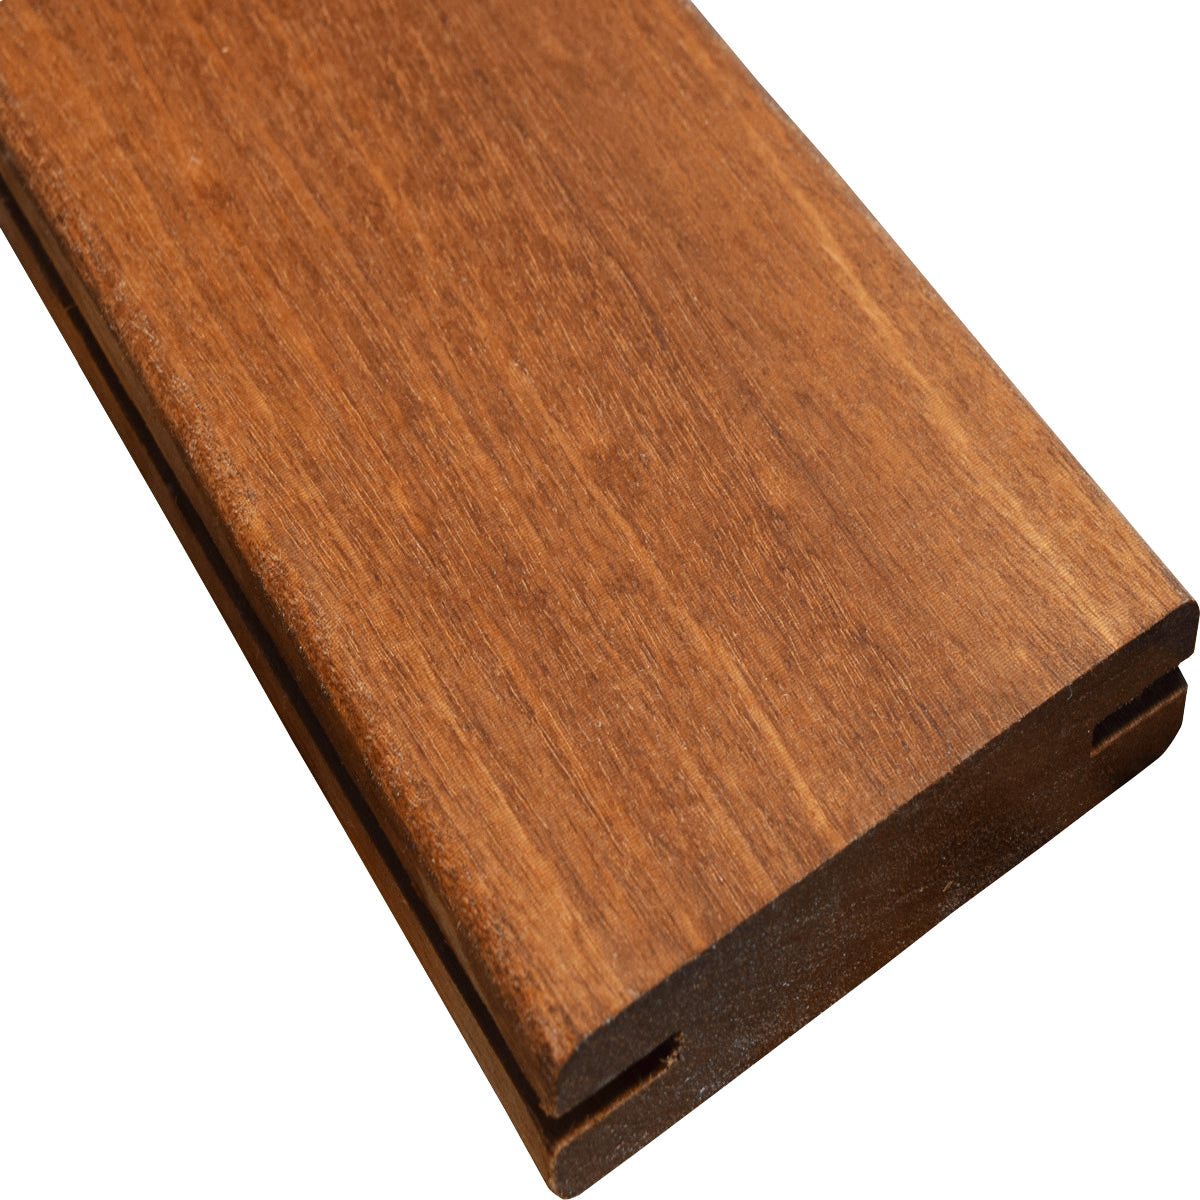 5/4 x 4 Golden Mahogany™ (Yellow Balau) Wood Pregrooved Decking